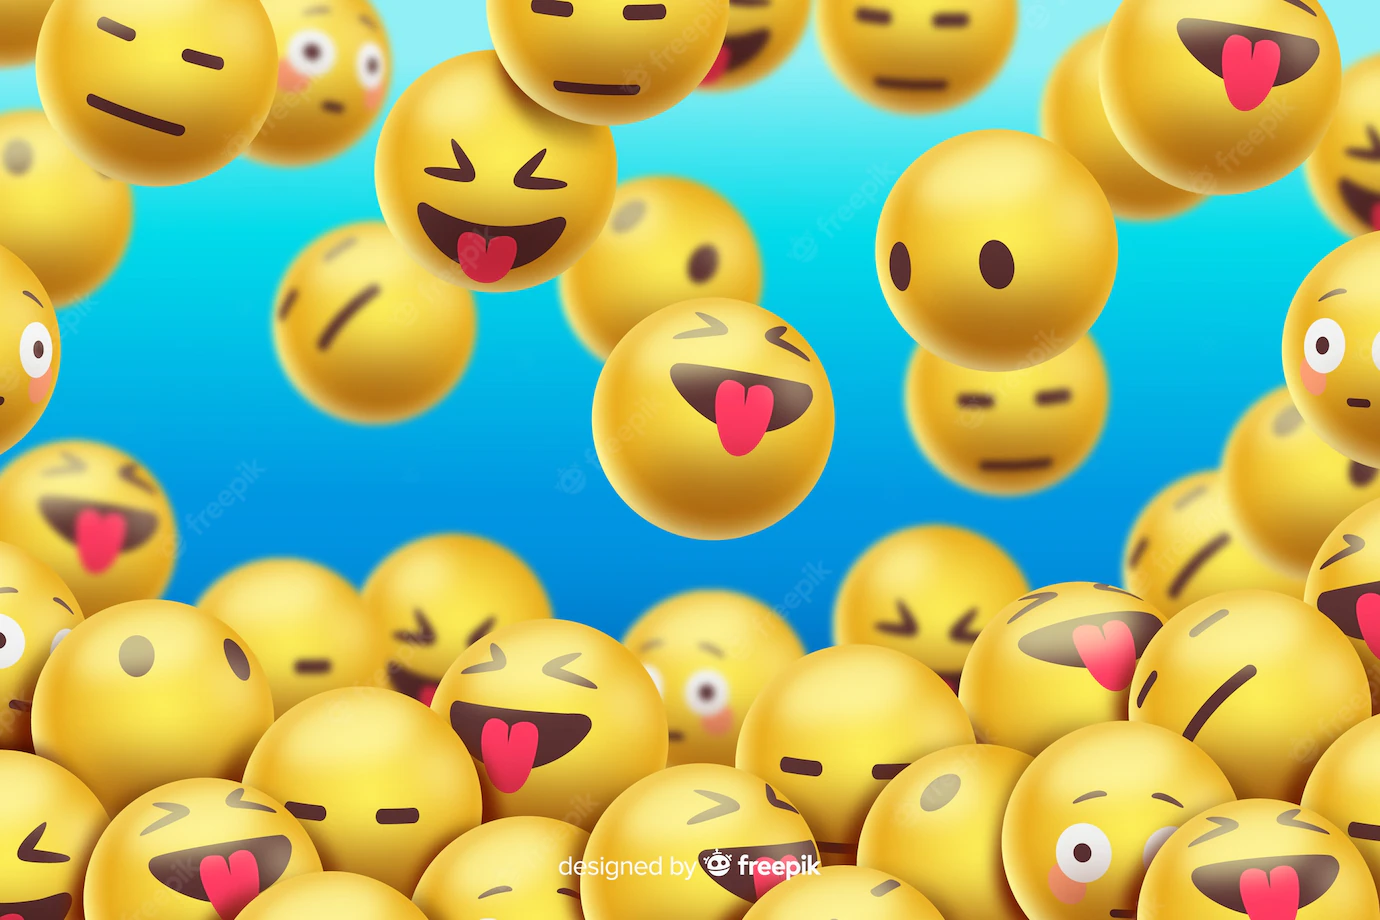 Floating Emojis Background Realistic Design 52683 27760